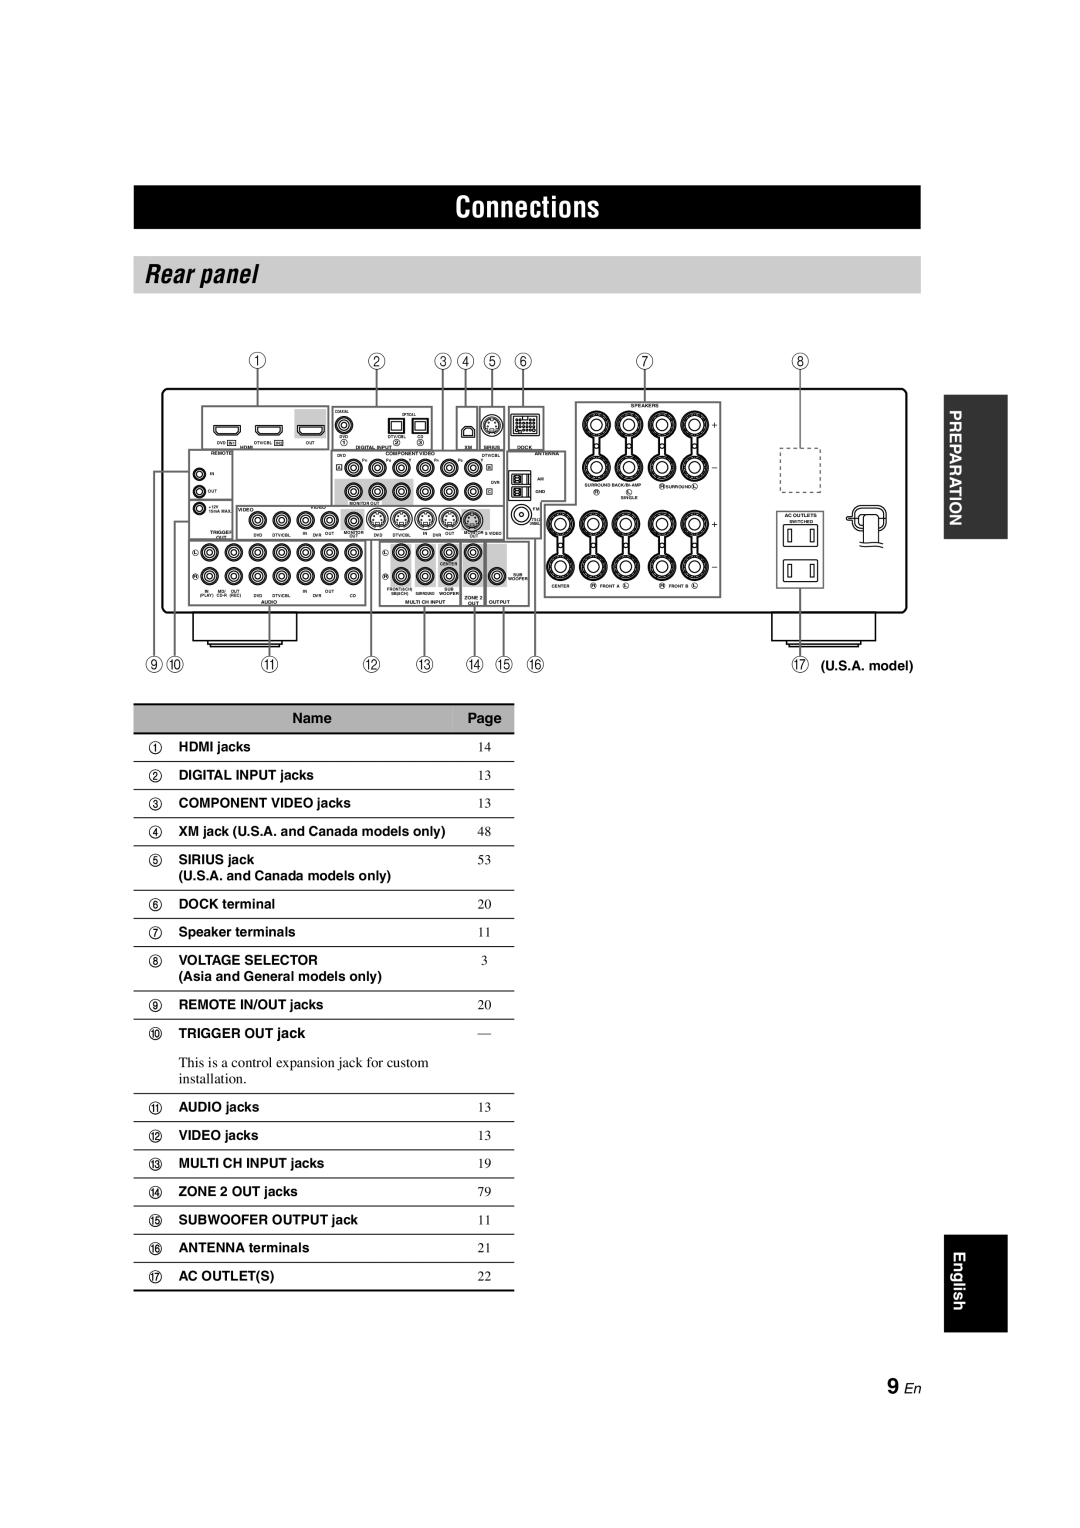 Yamaha RX-V563 owner manual Connections, Rear panel, 9 En, 3 4 5, D E F 